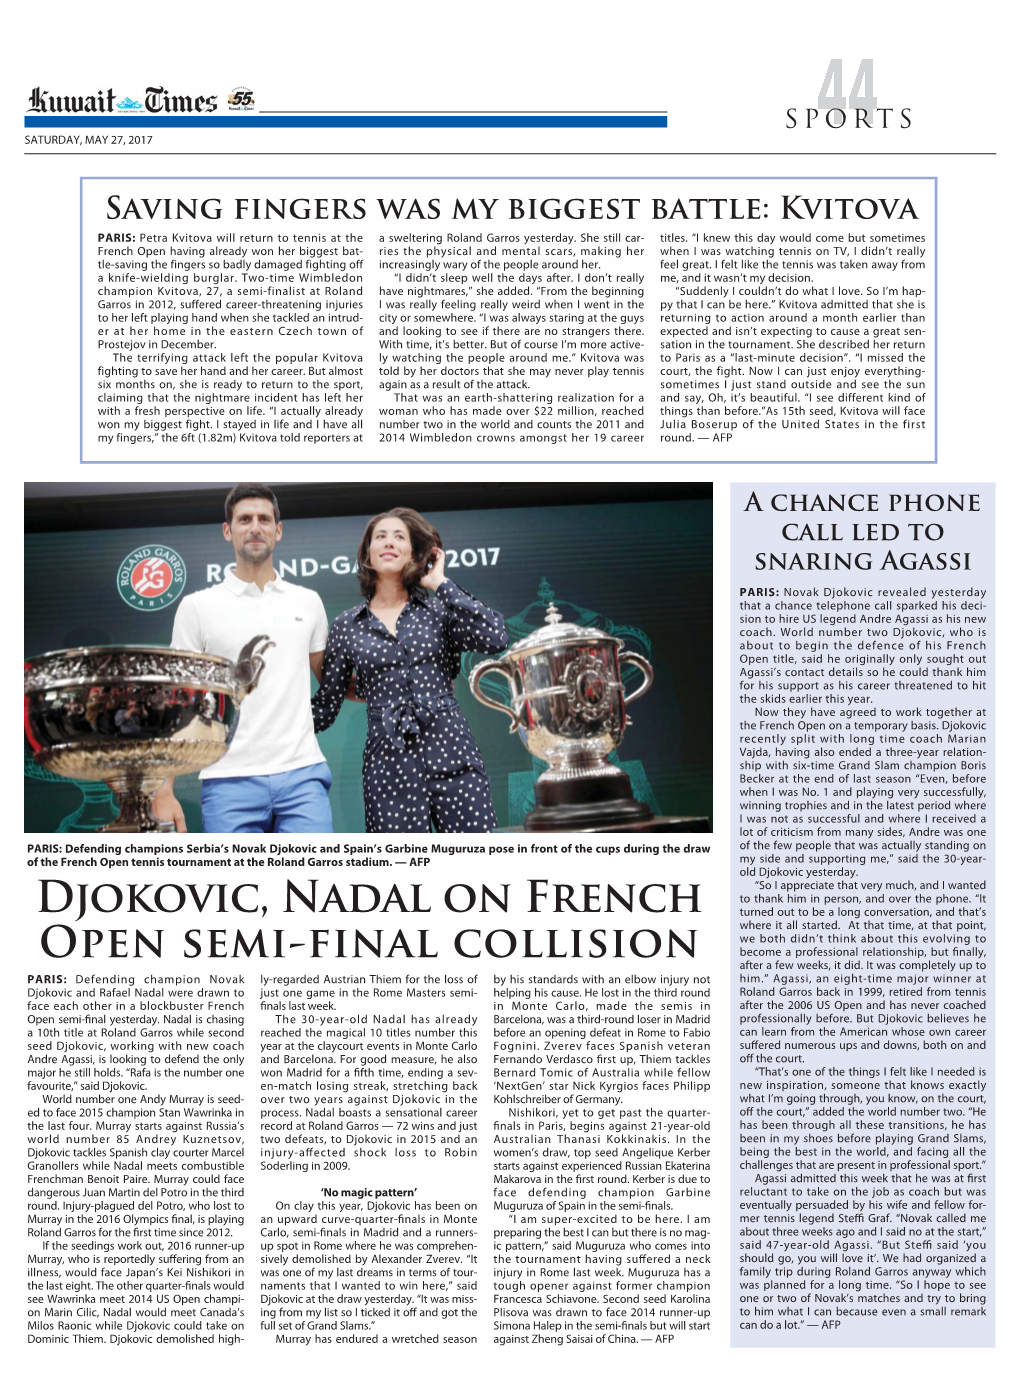 Djokovic, Nadal on French Open Semi-Final Collision